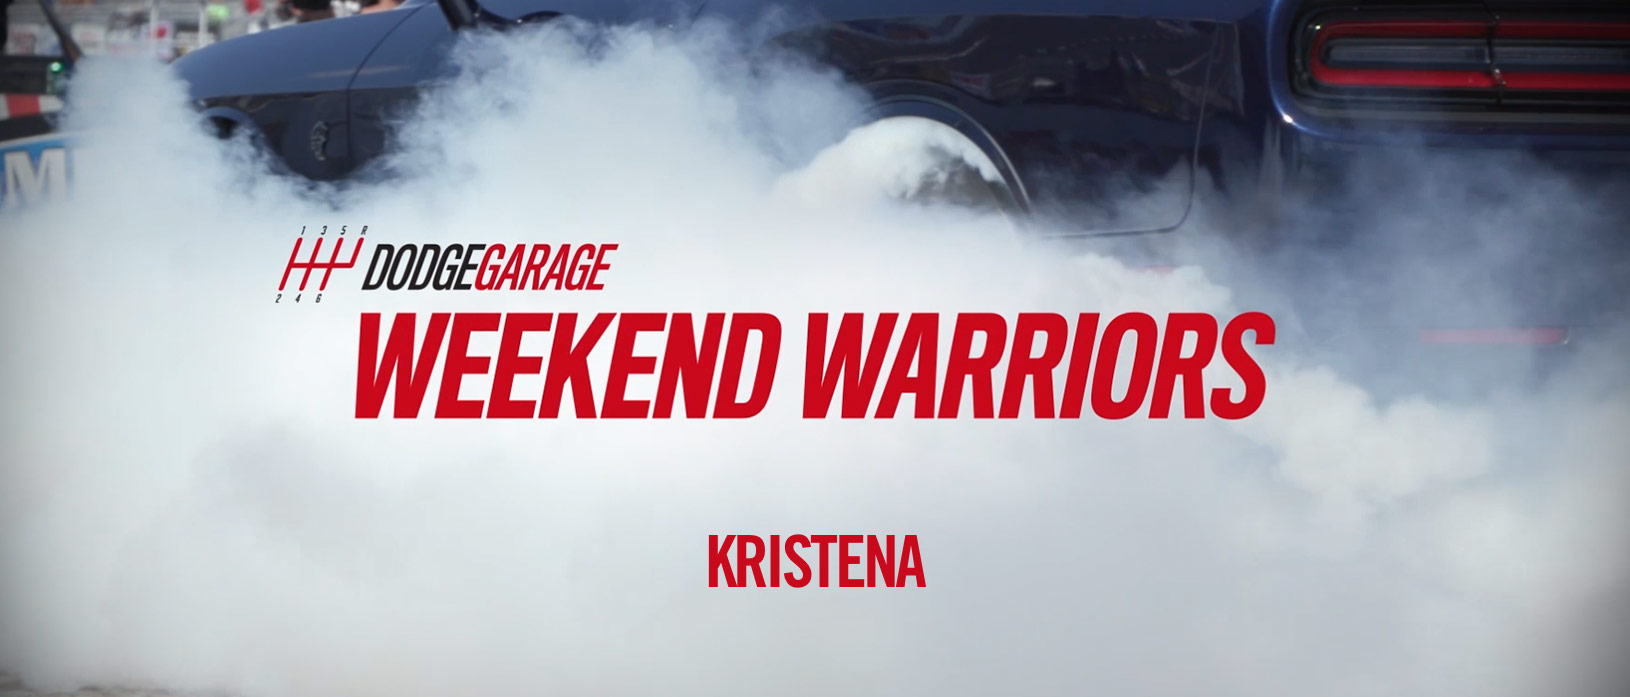 Weekend Warriors: Kristena